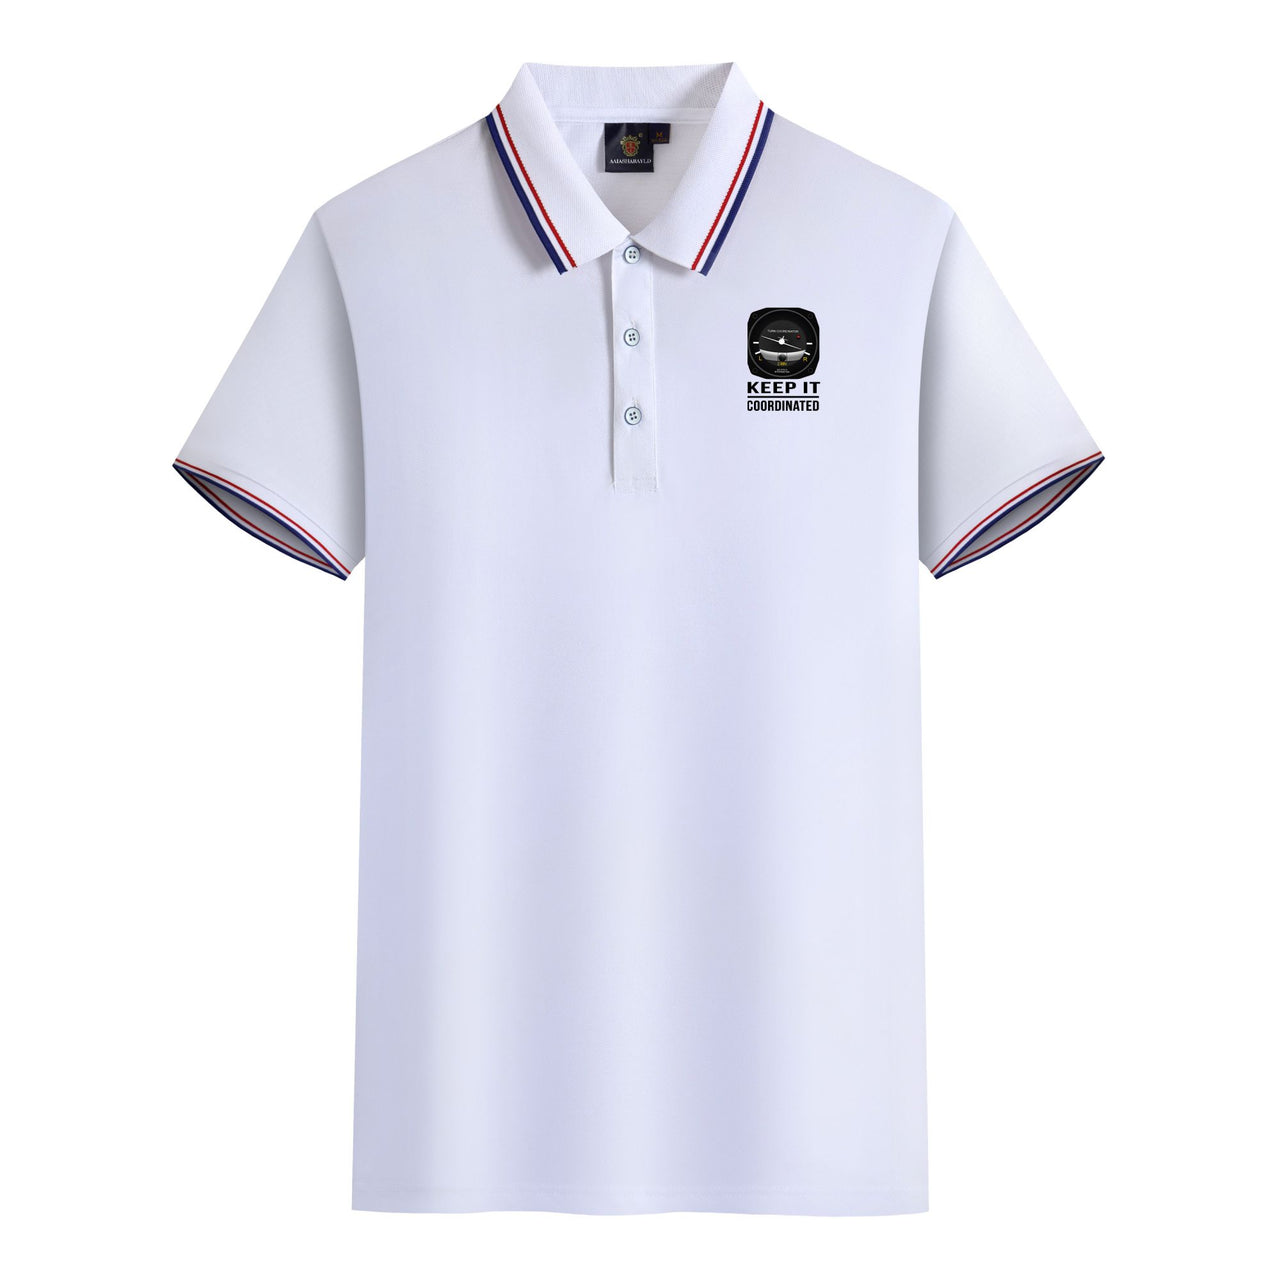 Keep It Coordinated Designed Stylish Polo T-Shirts